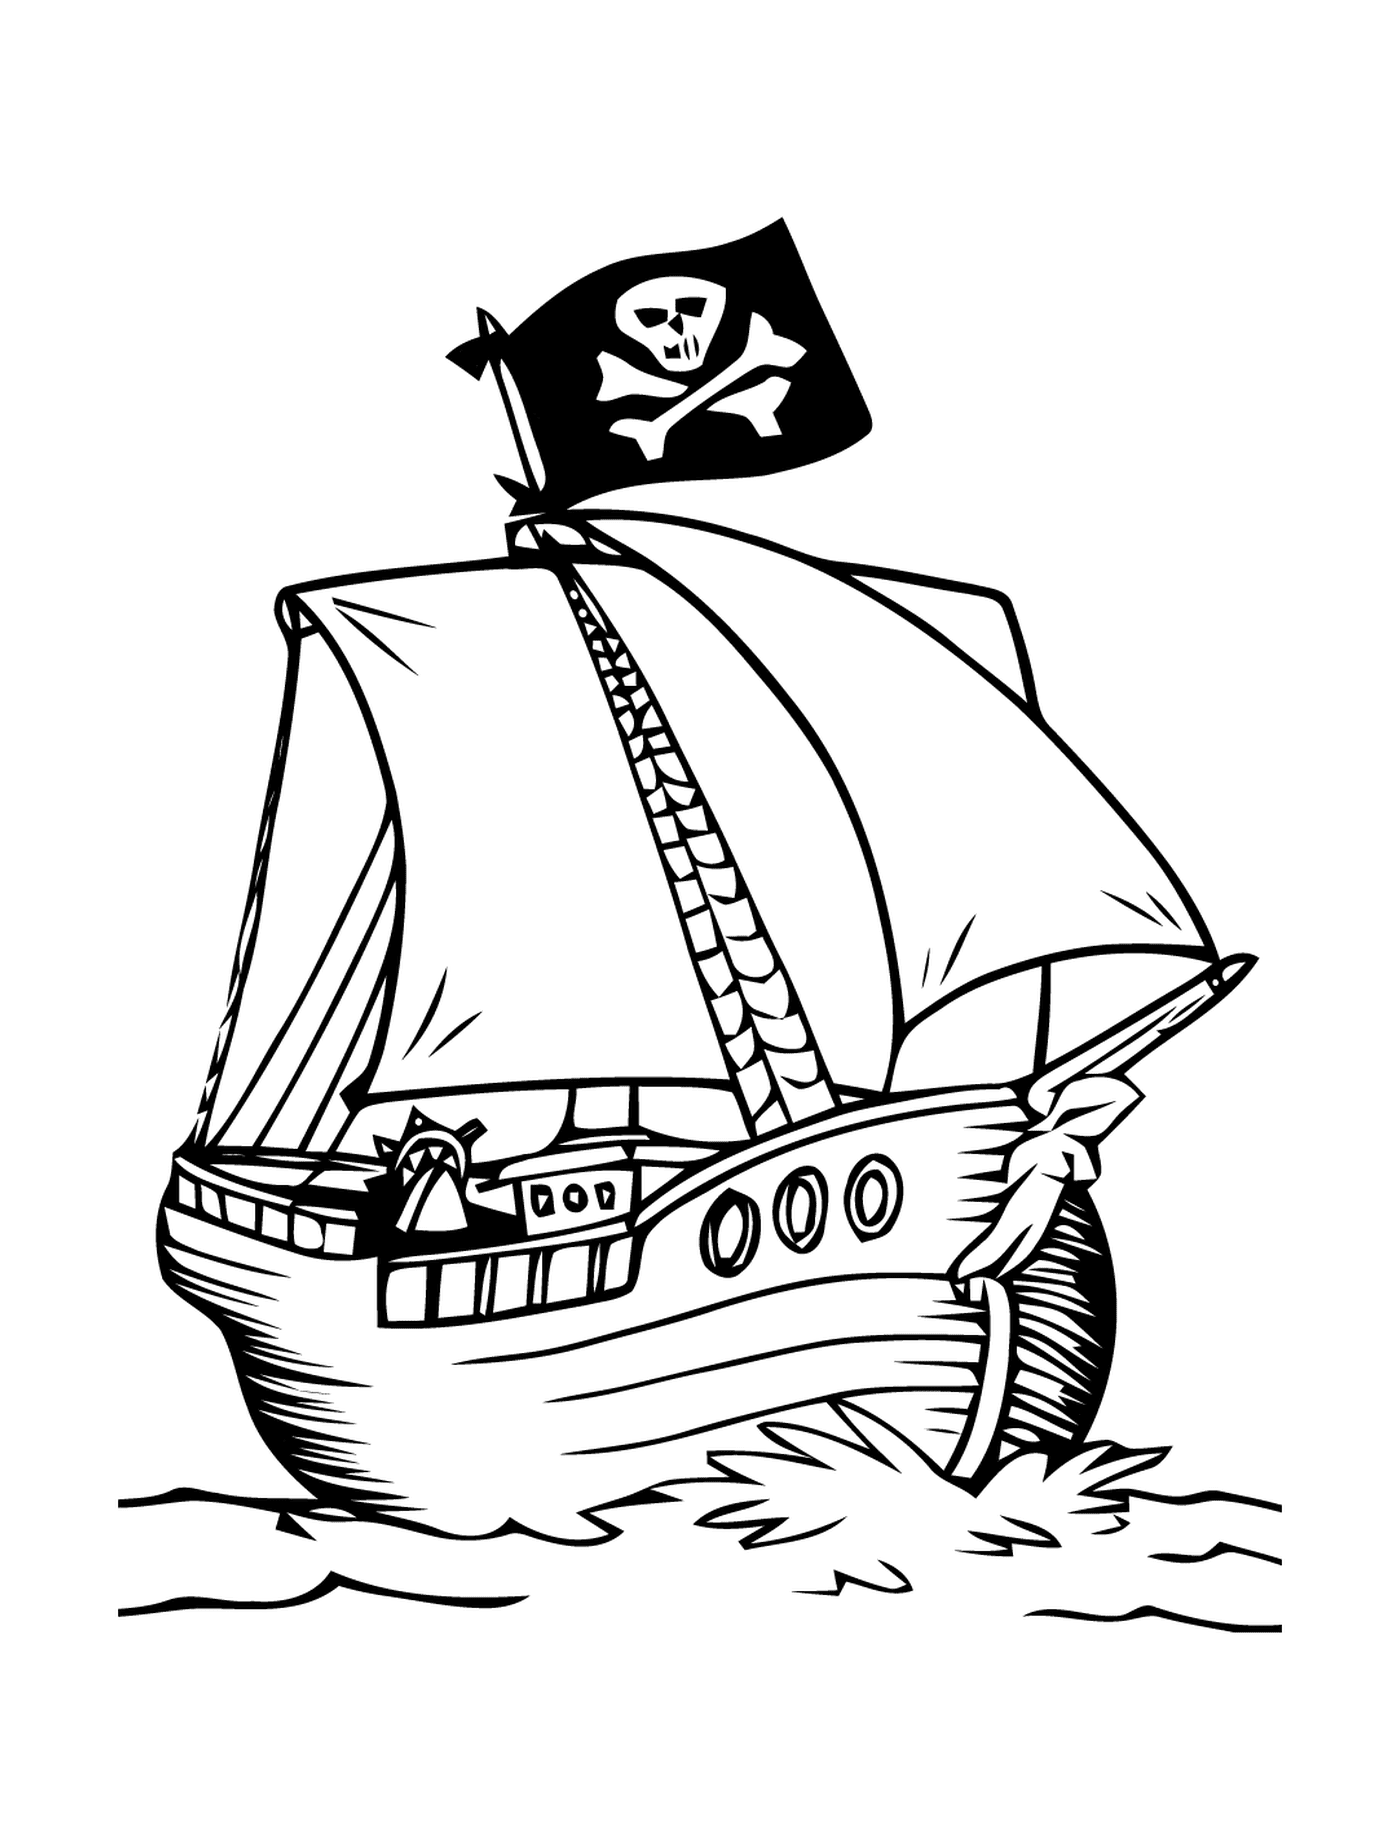  Pirata barca con bandiera spaventosa 